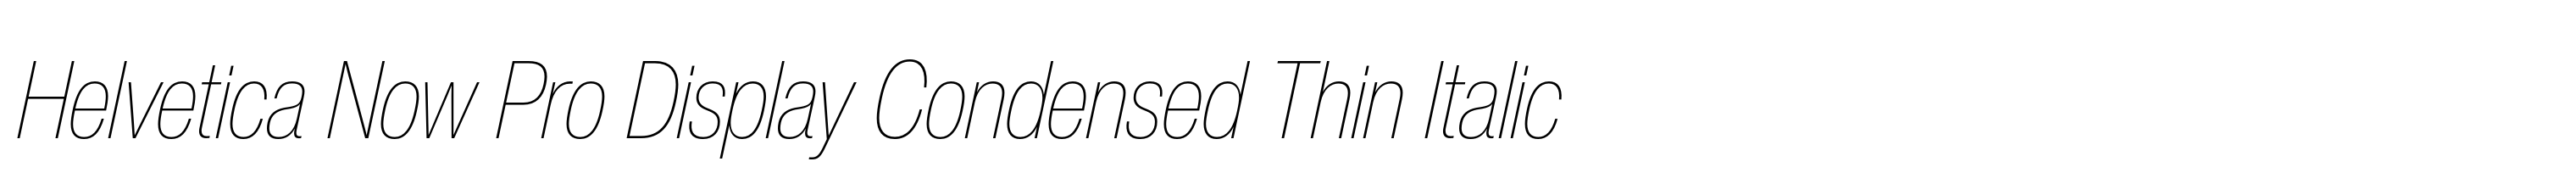 Helvetica Now Pro Display Condensed Thin Italic